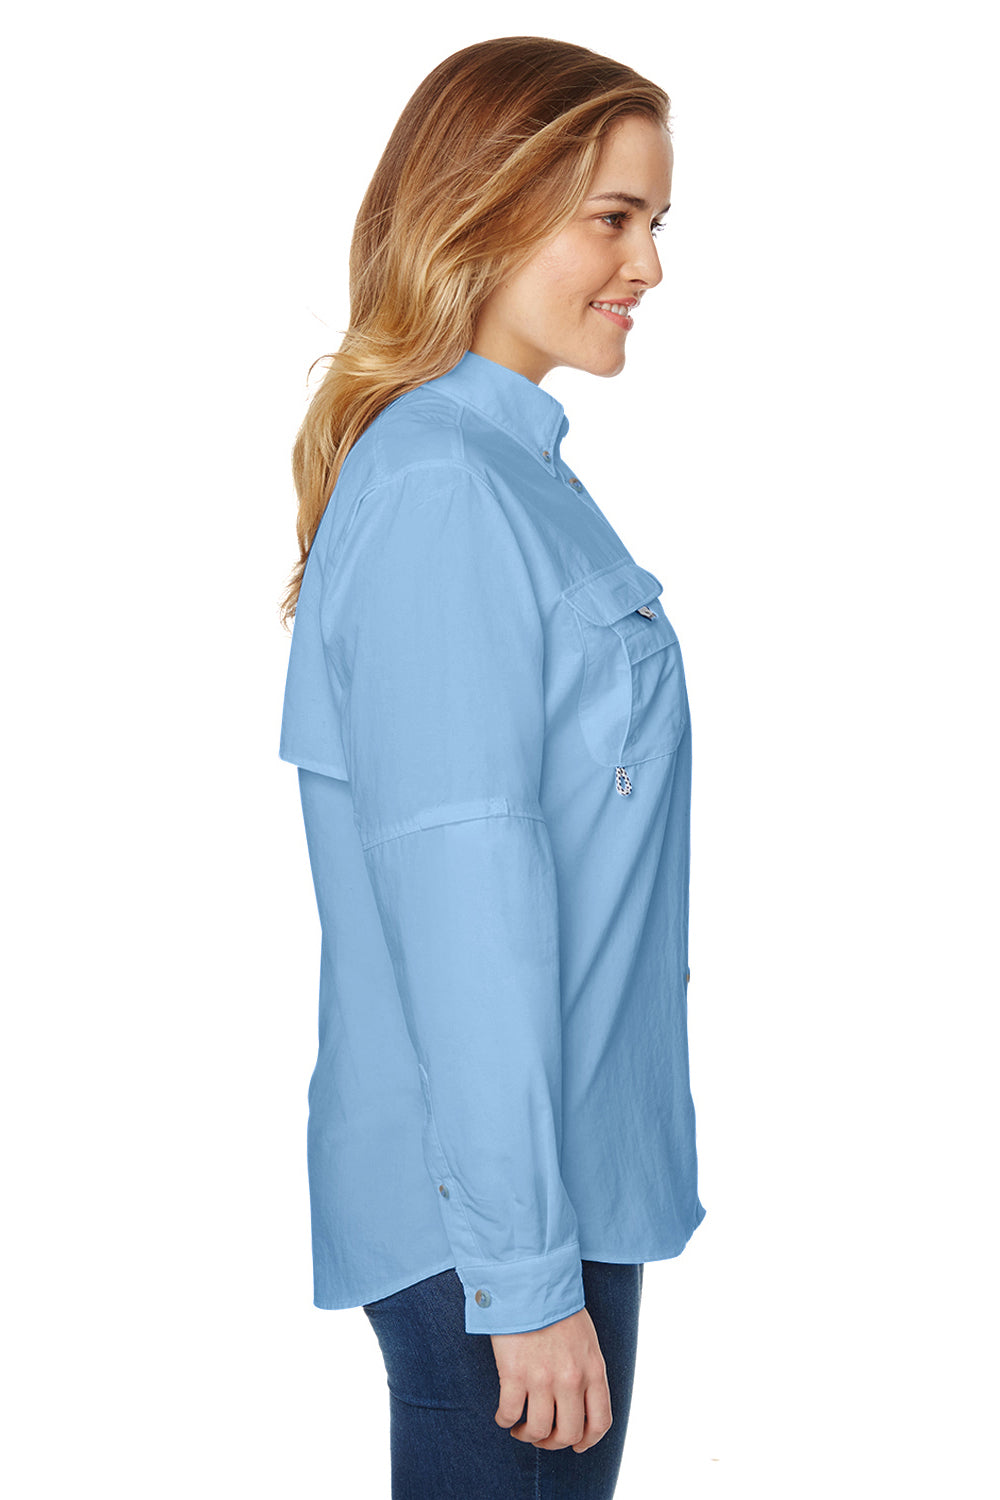 Columbia 7314 Womens Bahama Moisture Wicking Long Sleeve Button Down Shirt w/ Double Pockets White Cap Blue Side